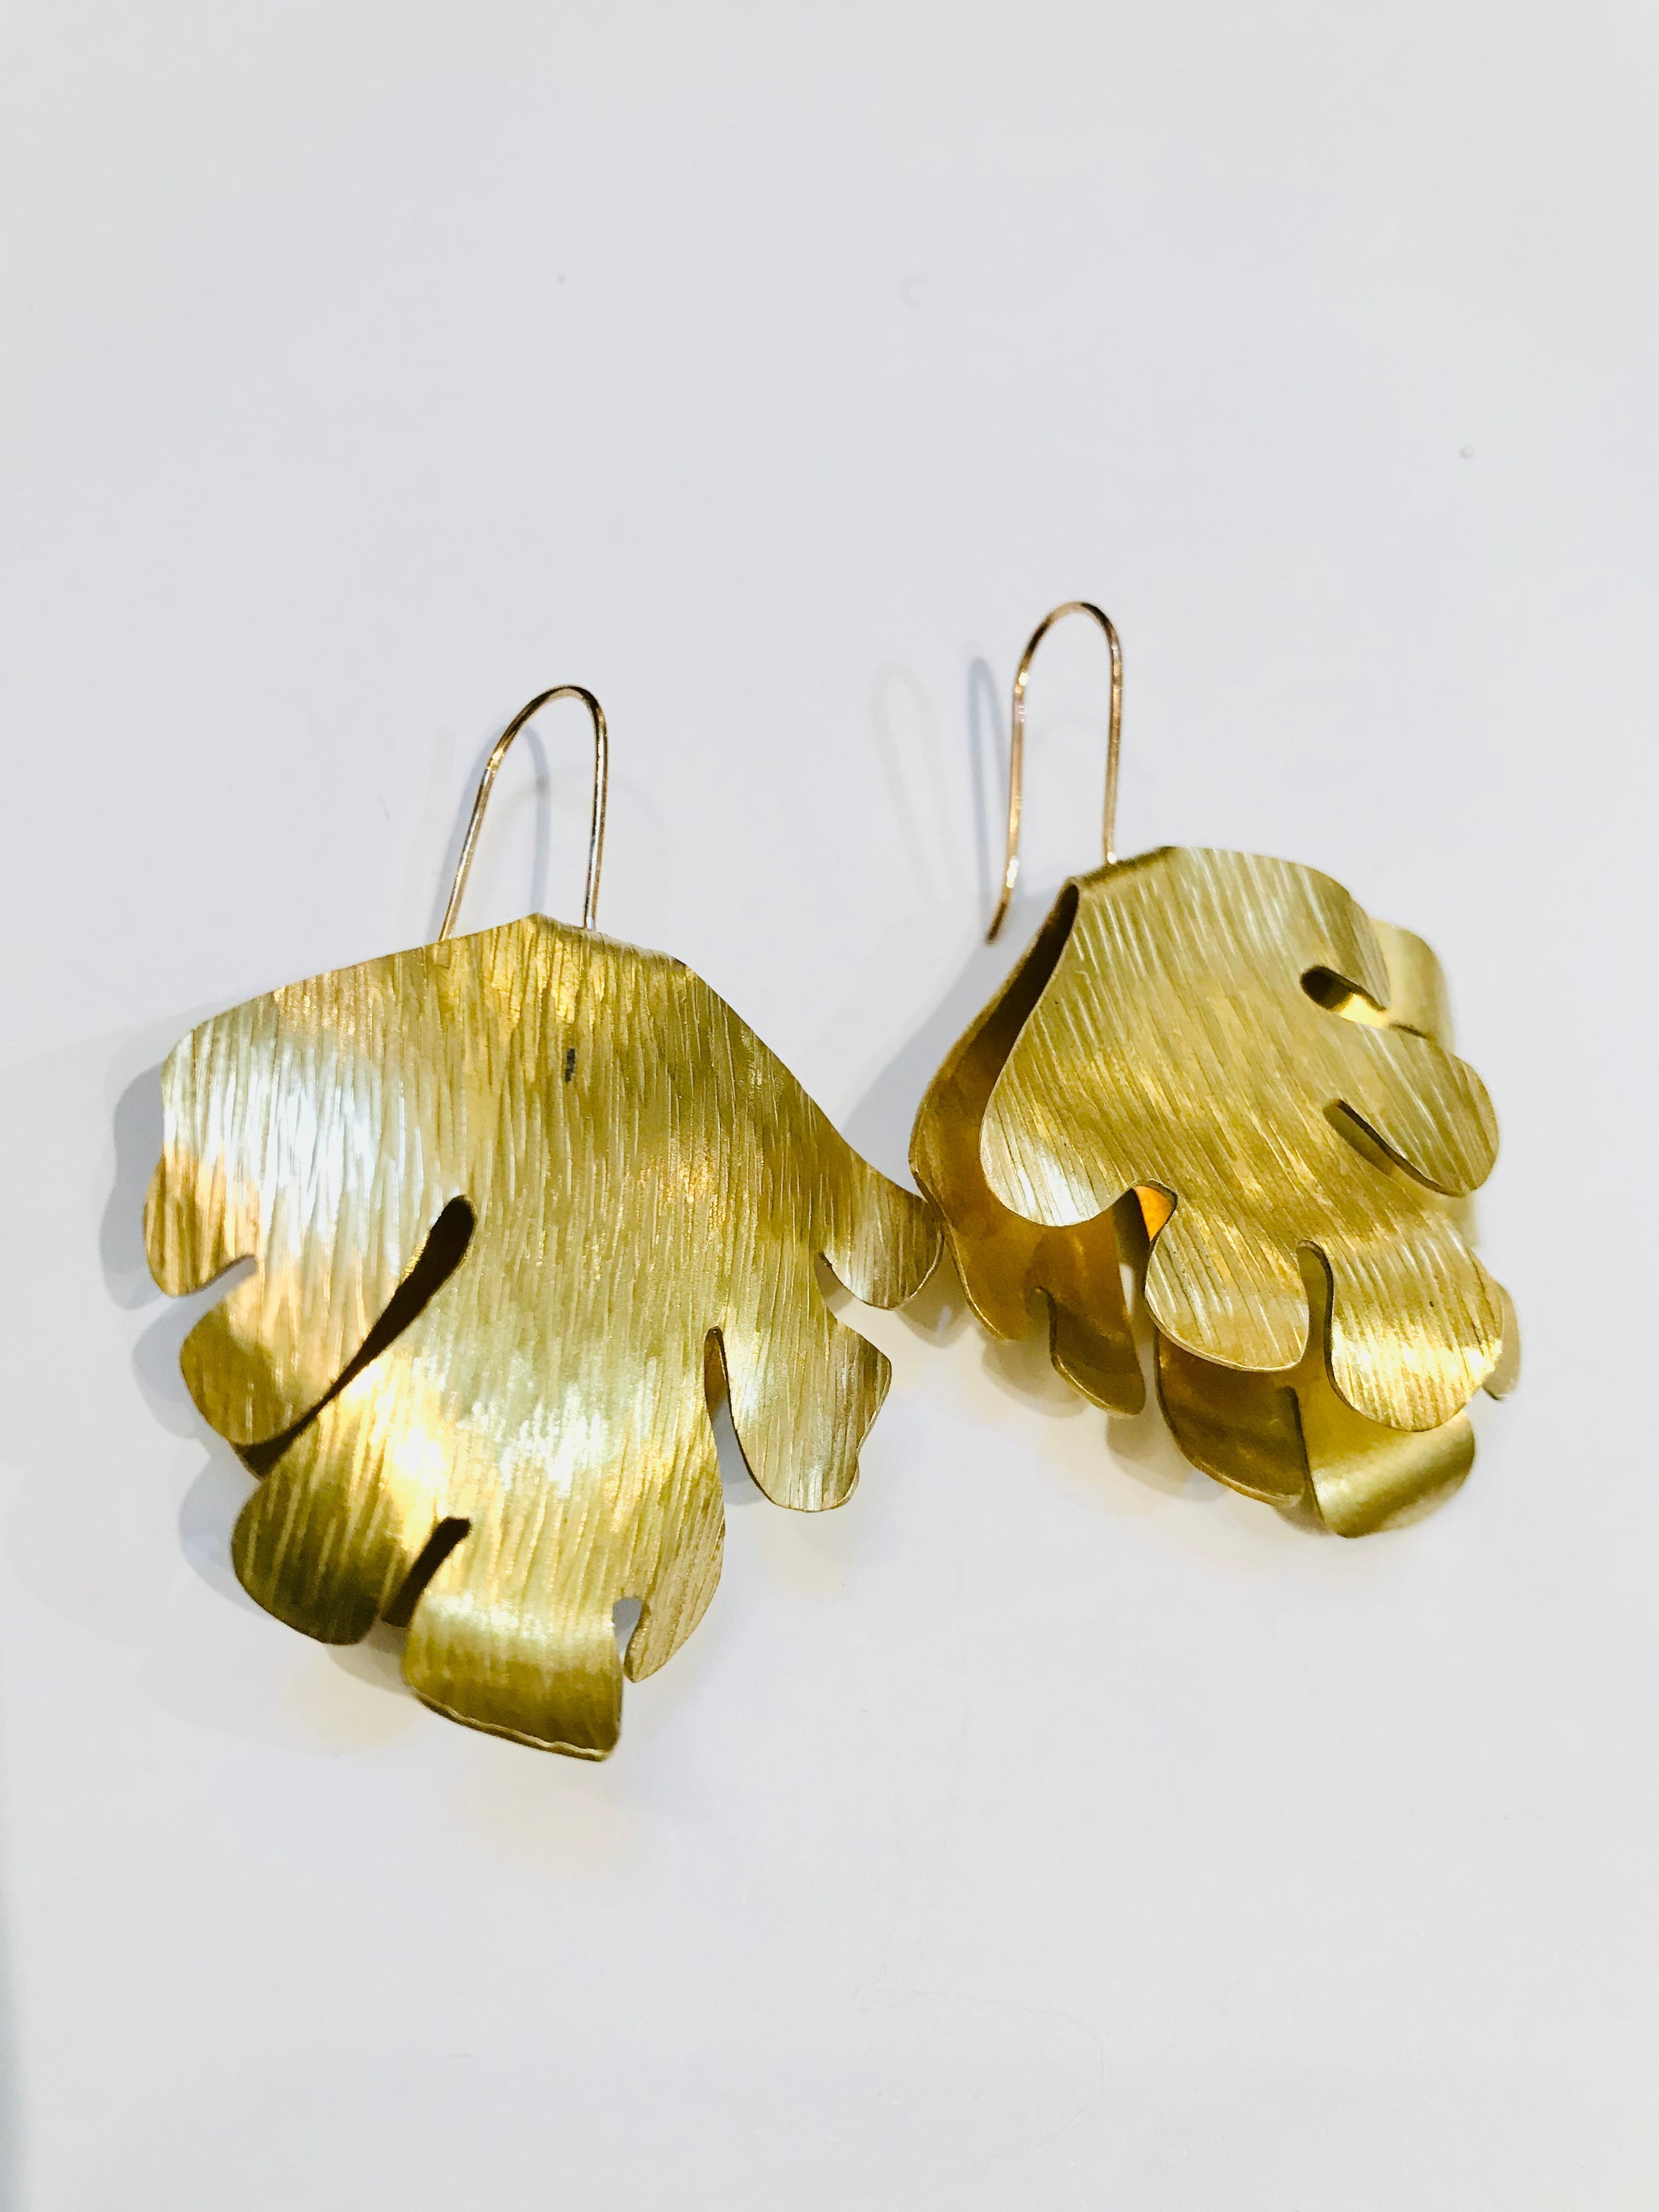 Seaweed Wave Earrings - The Nancy Smillie Shop - Art, Jewellery & Designer Gifts Glasgow